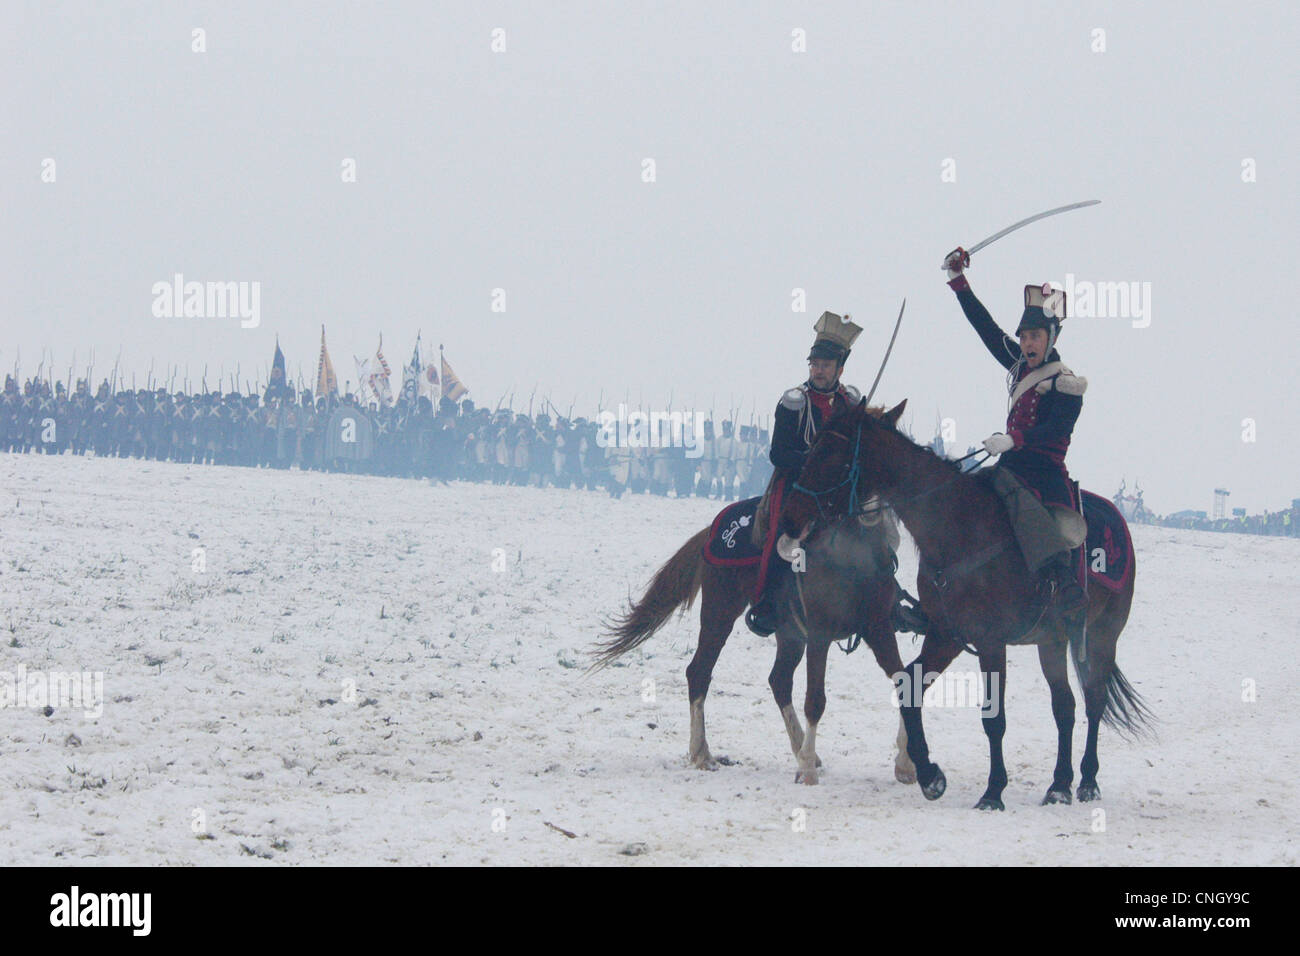 Russian cavalry. Re-enactment of the Battle of Austerlitz (1805) at Santon Hill near the village of Tvarozna, Czech Republic. Stock Photo